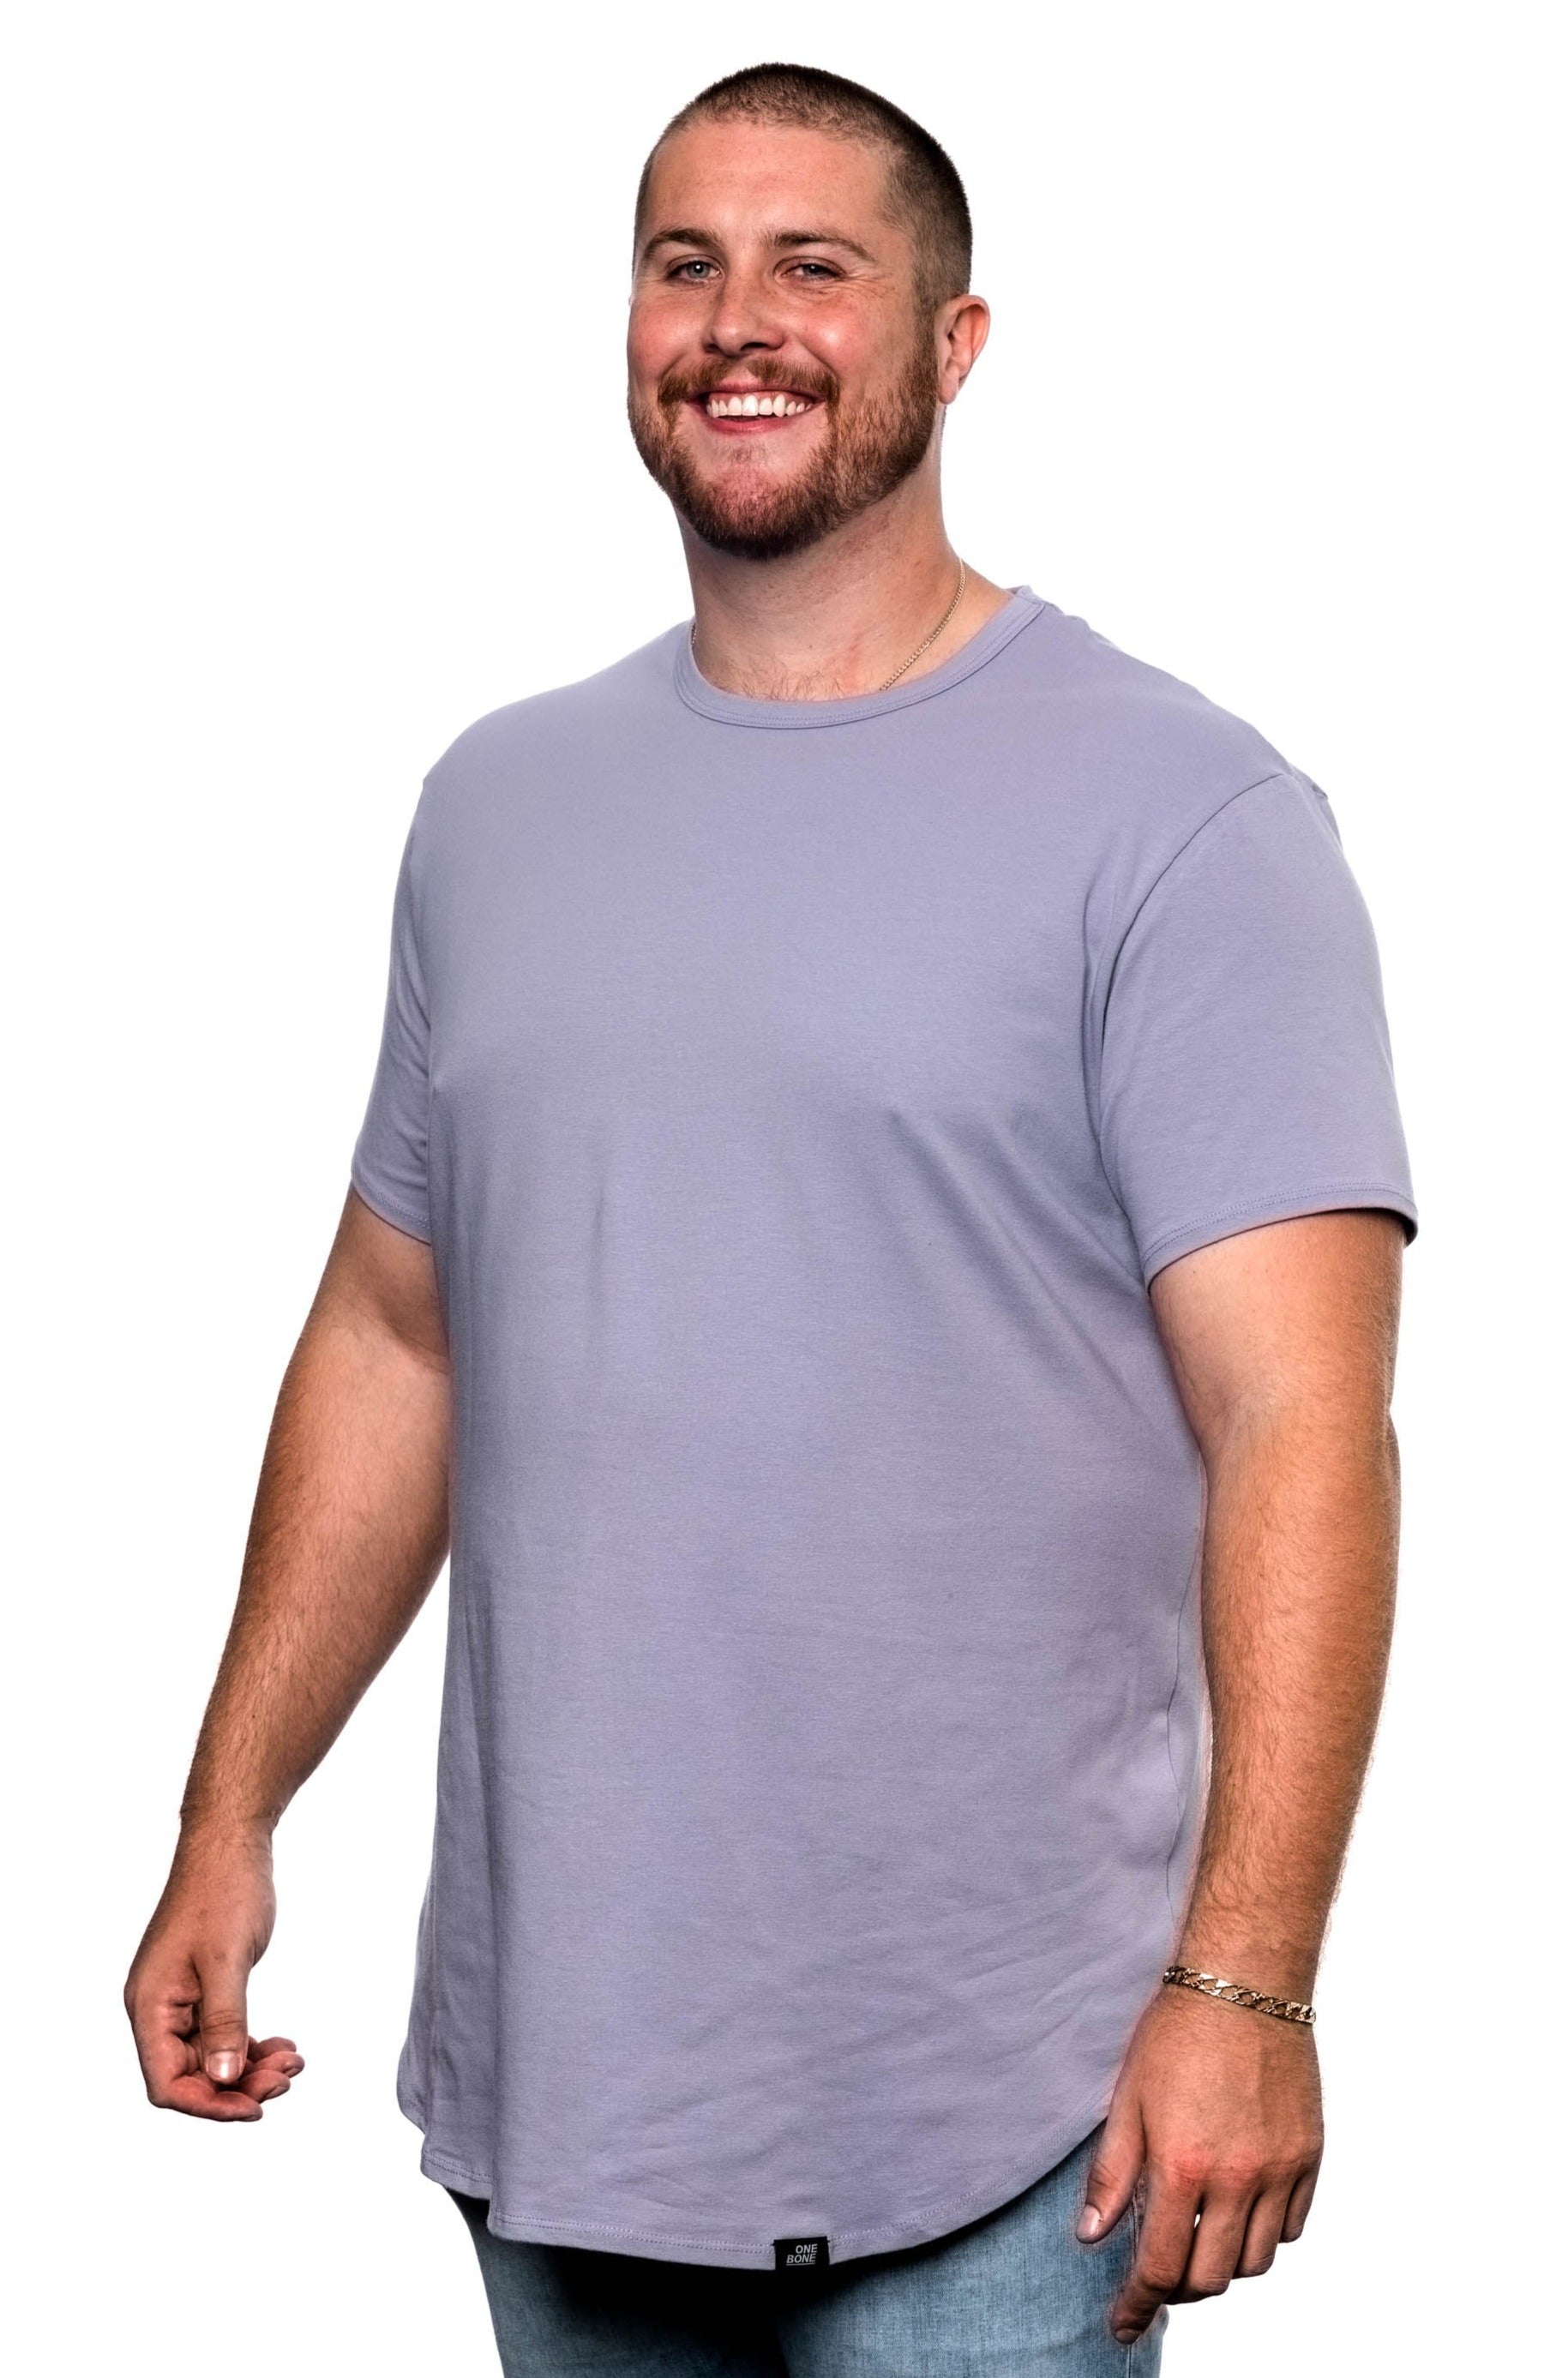 Scoop - T-Shirt - Lavender